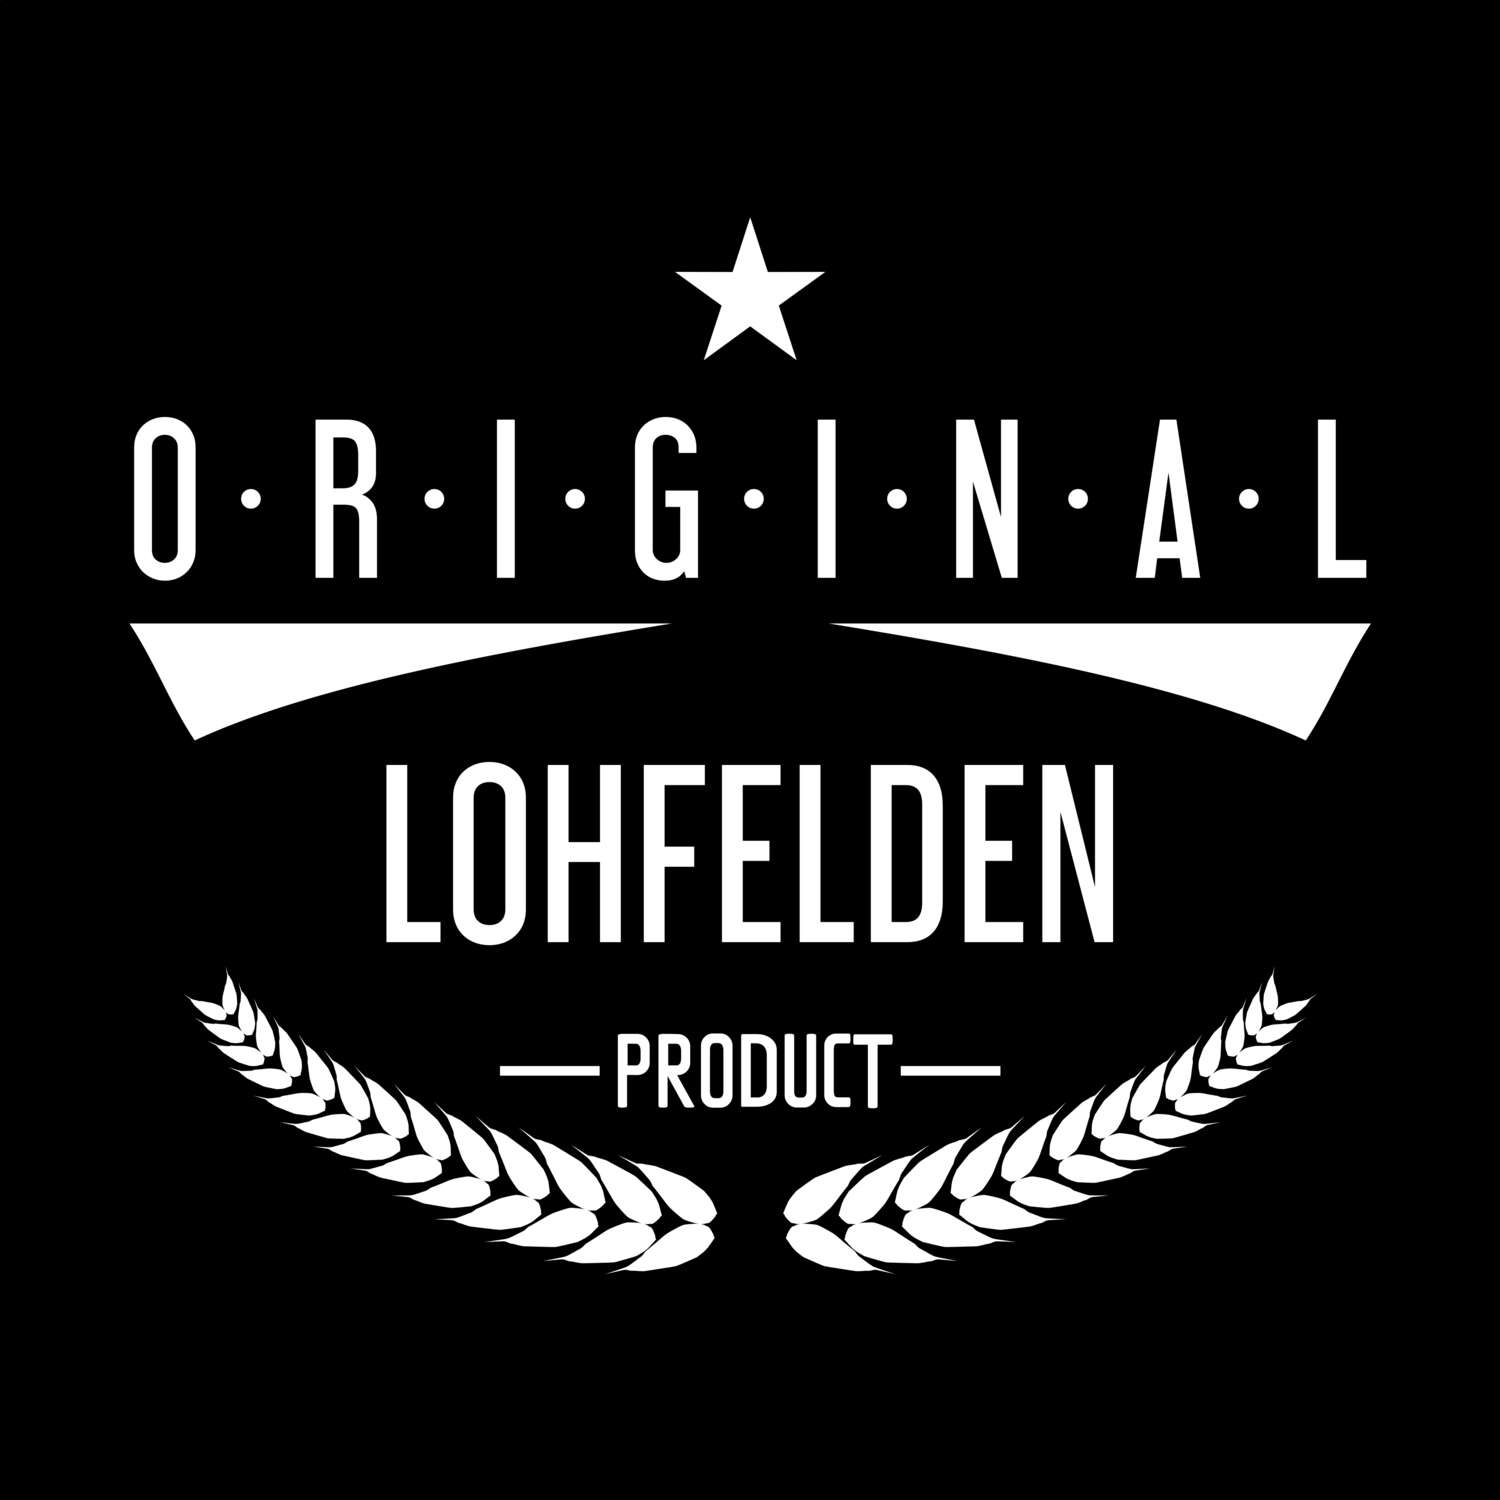 Lohfelden T-Shirt »Original Product«